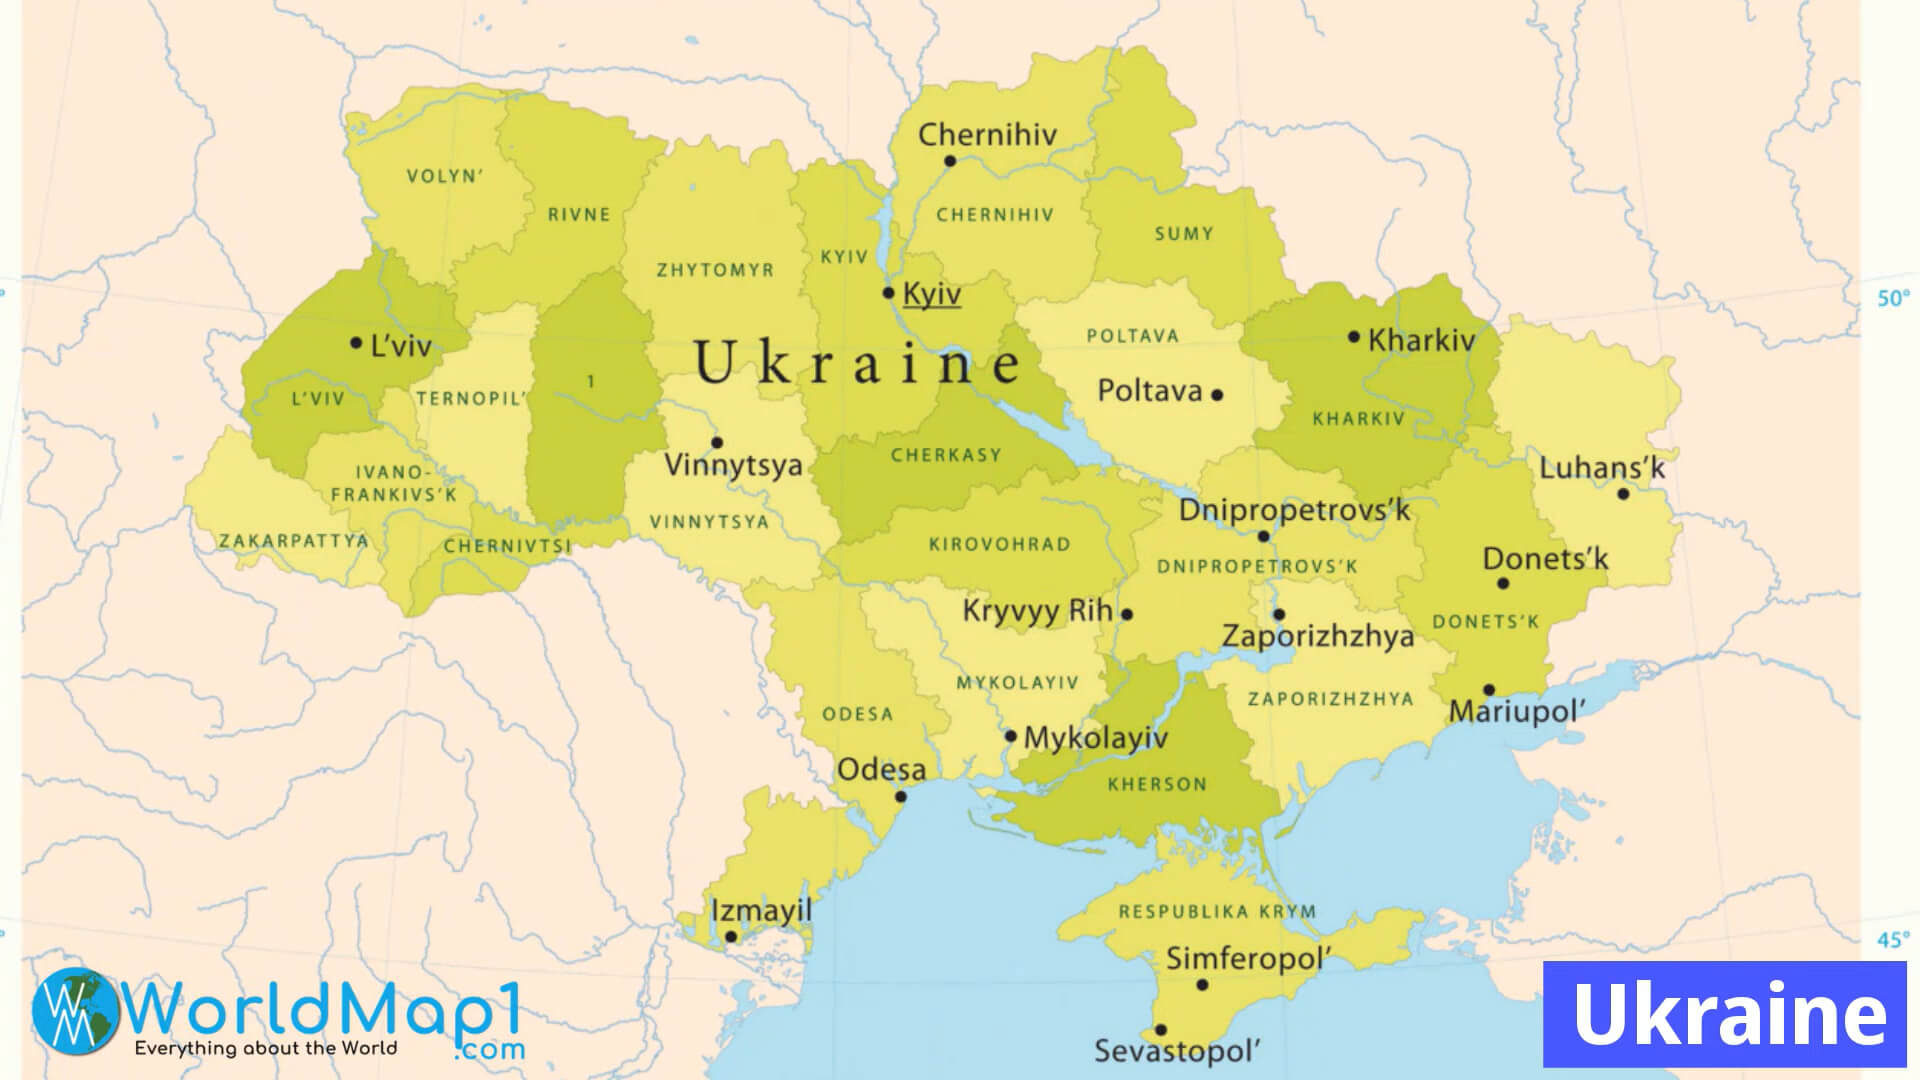 Ukraine Political Map